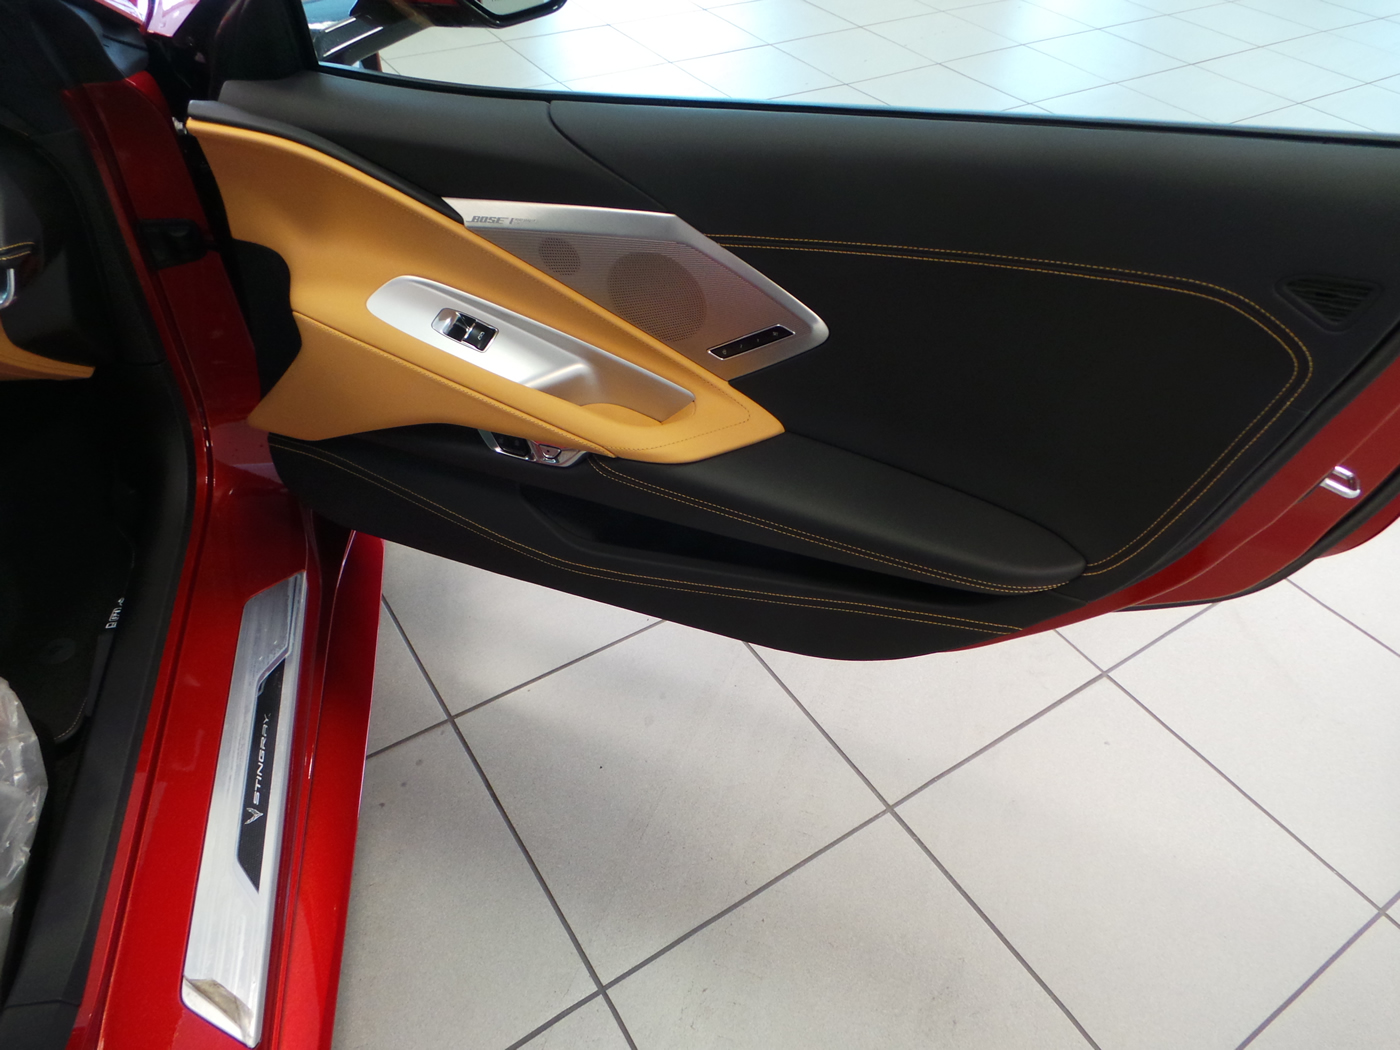 2021 Corvette Stingray Convertible in Red Mist